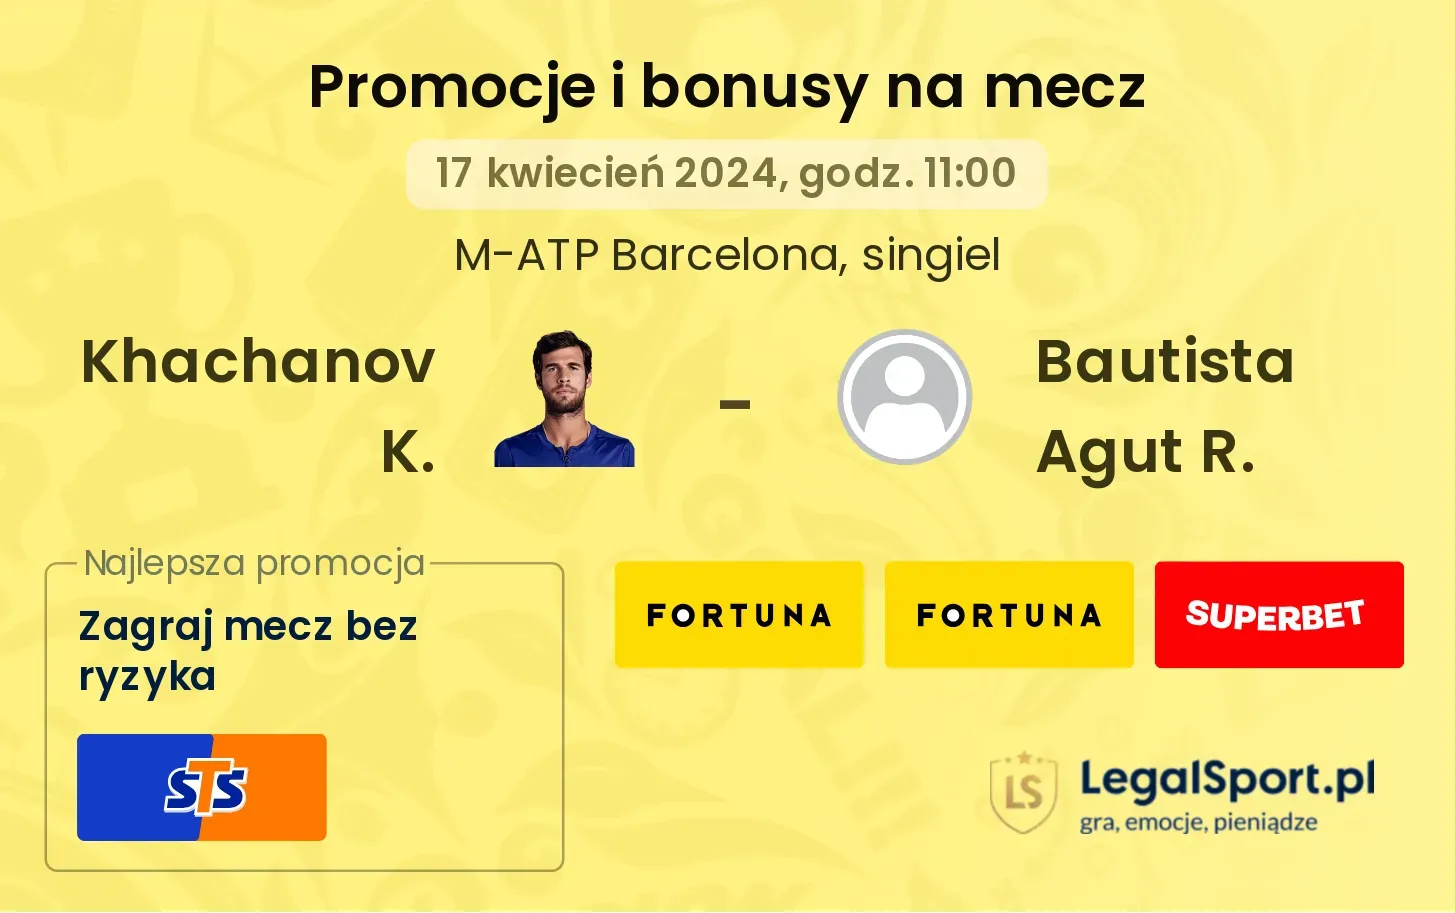 Khachanov K. - Bautista Agut R. promocje bonusy na mecz